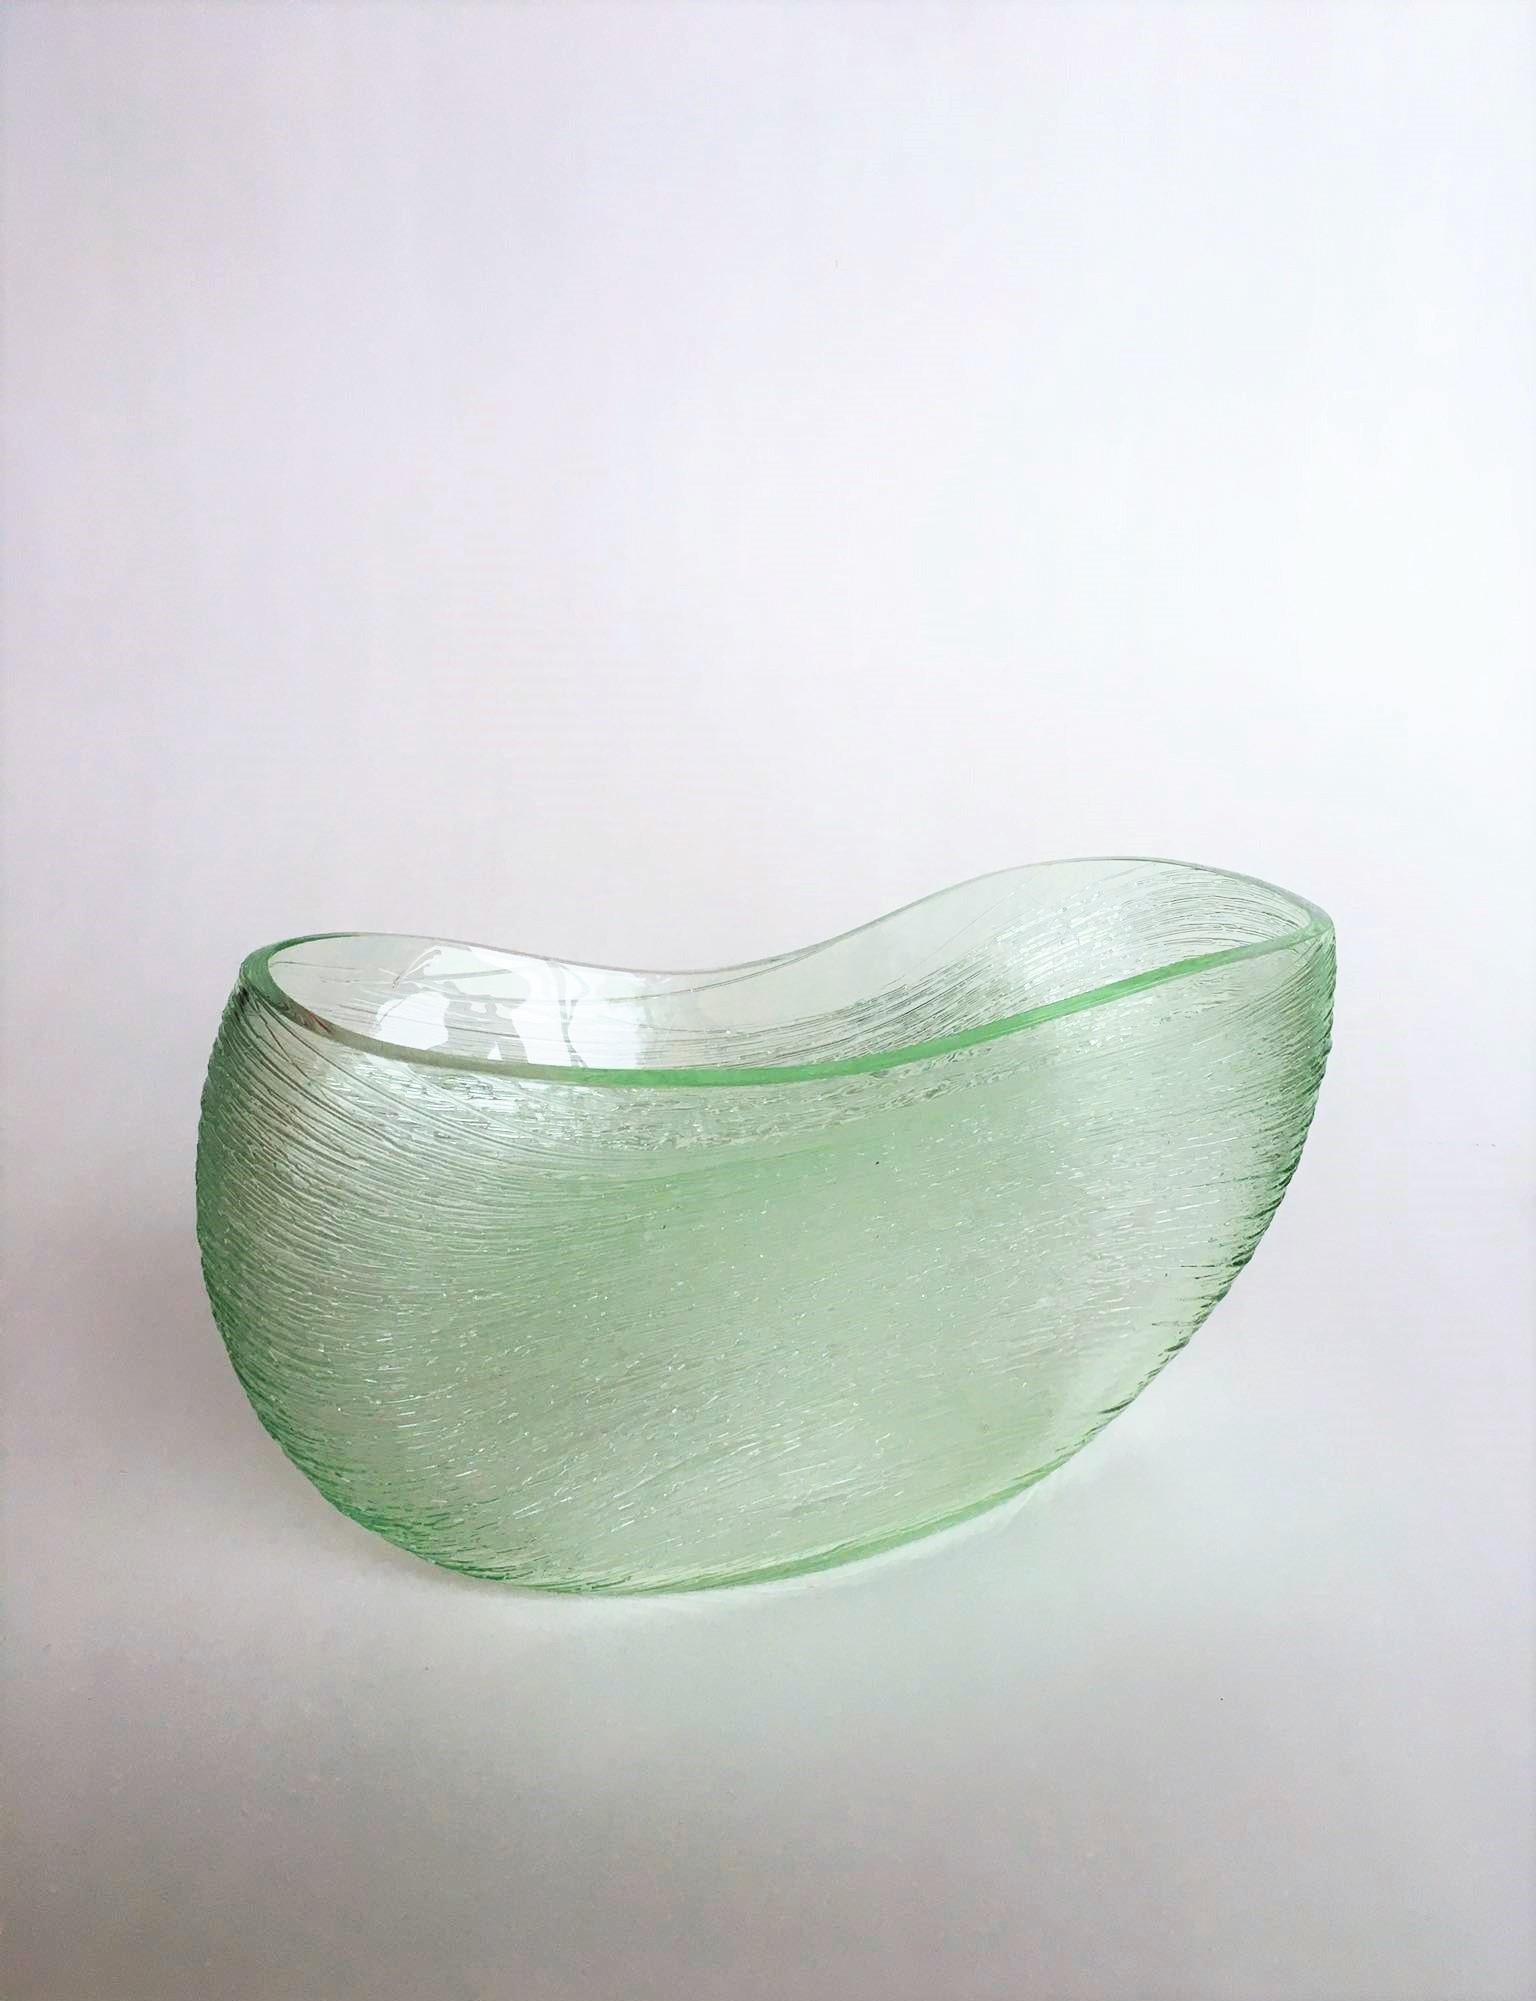 Oval Fluid Form, green- 21st Century Blown Glass Object 